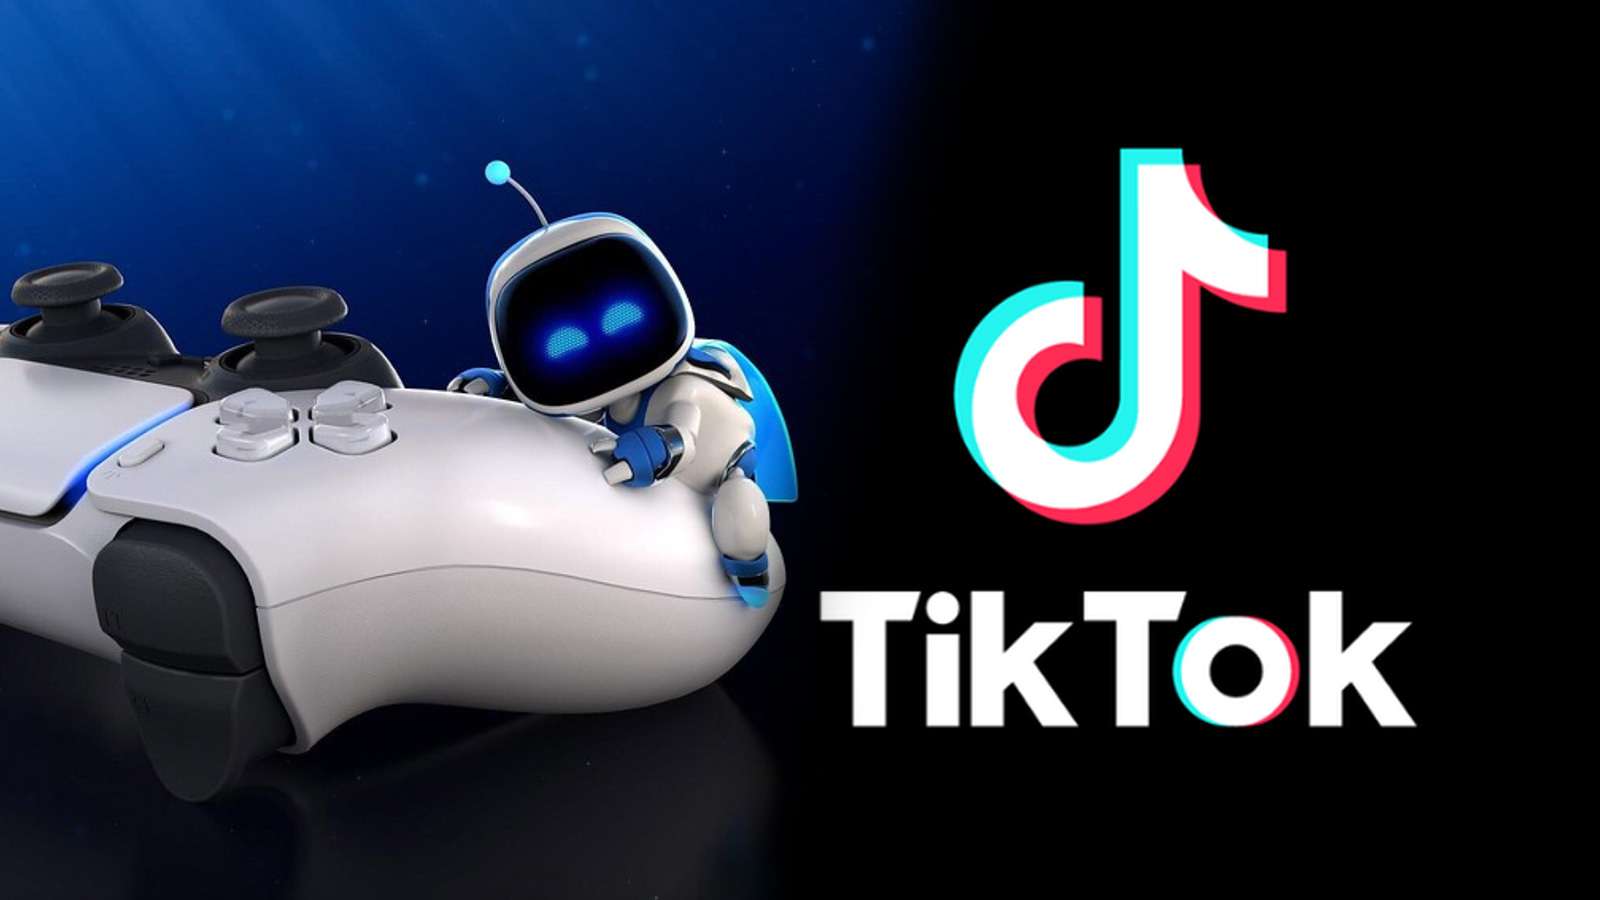 PlayStation 5 Dual Sense controller with TikTok logo.